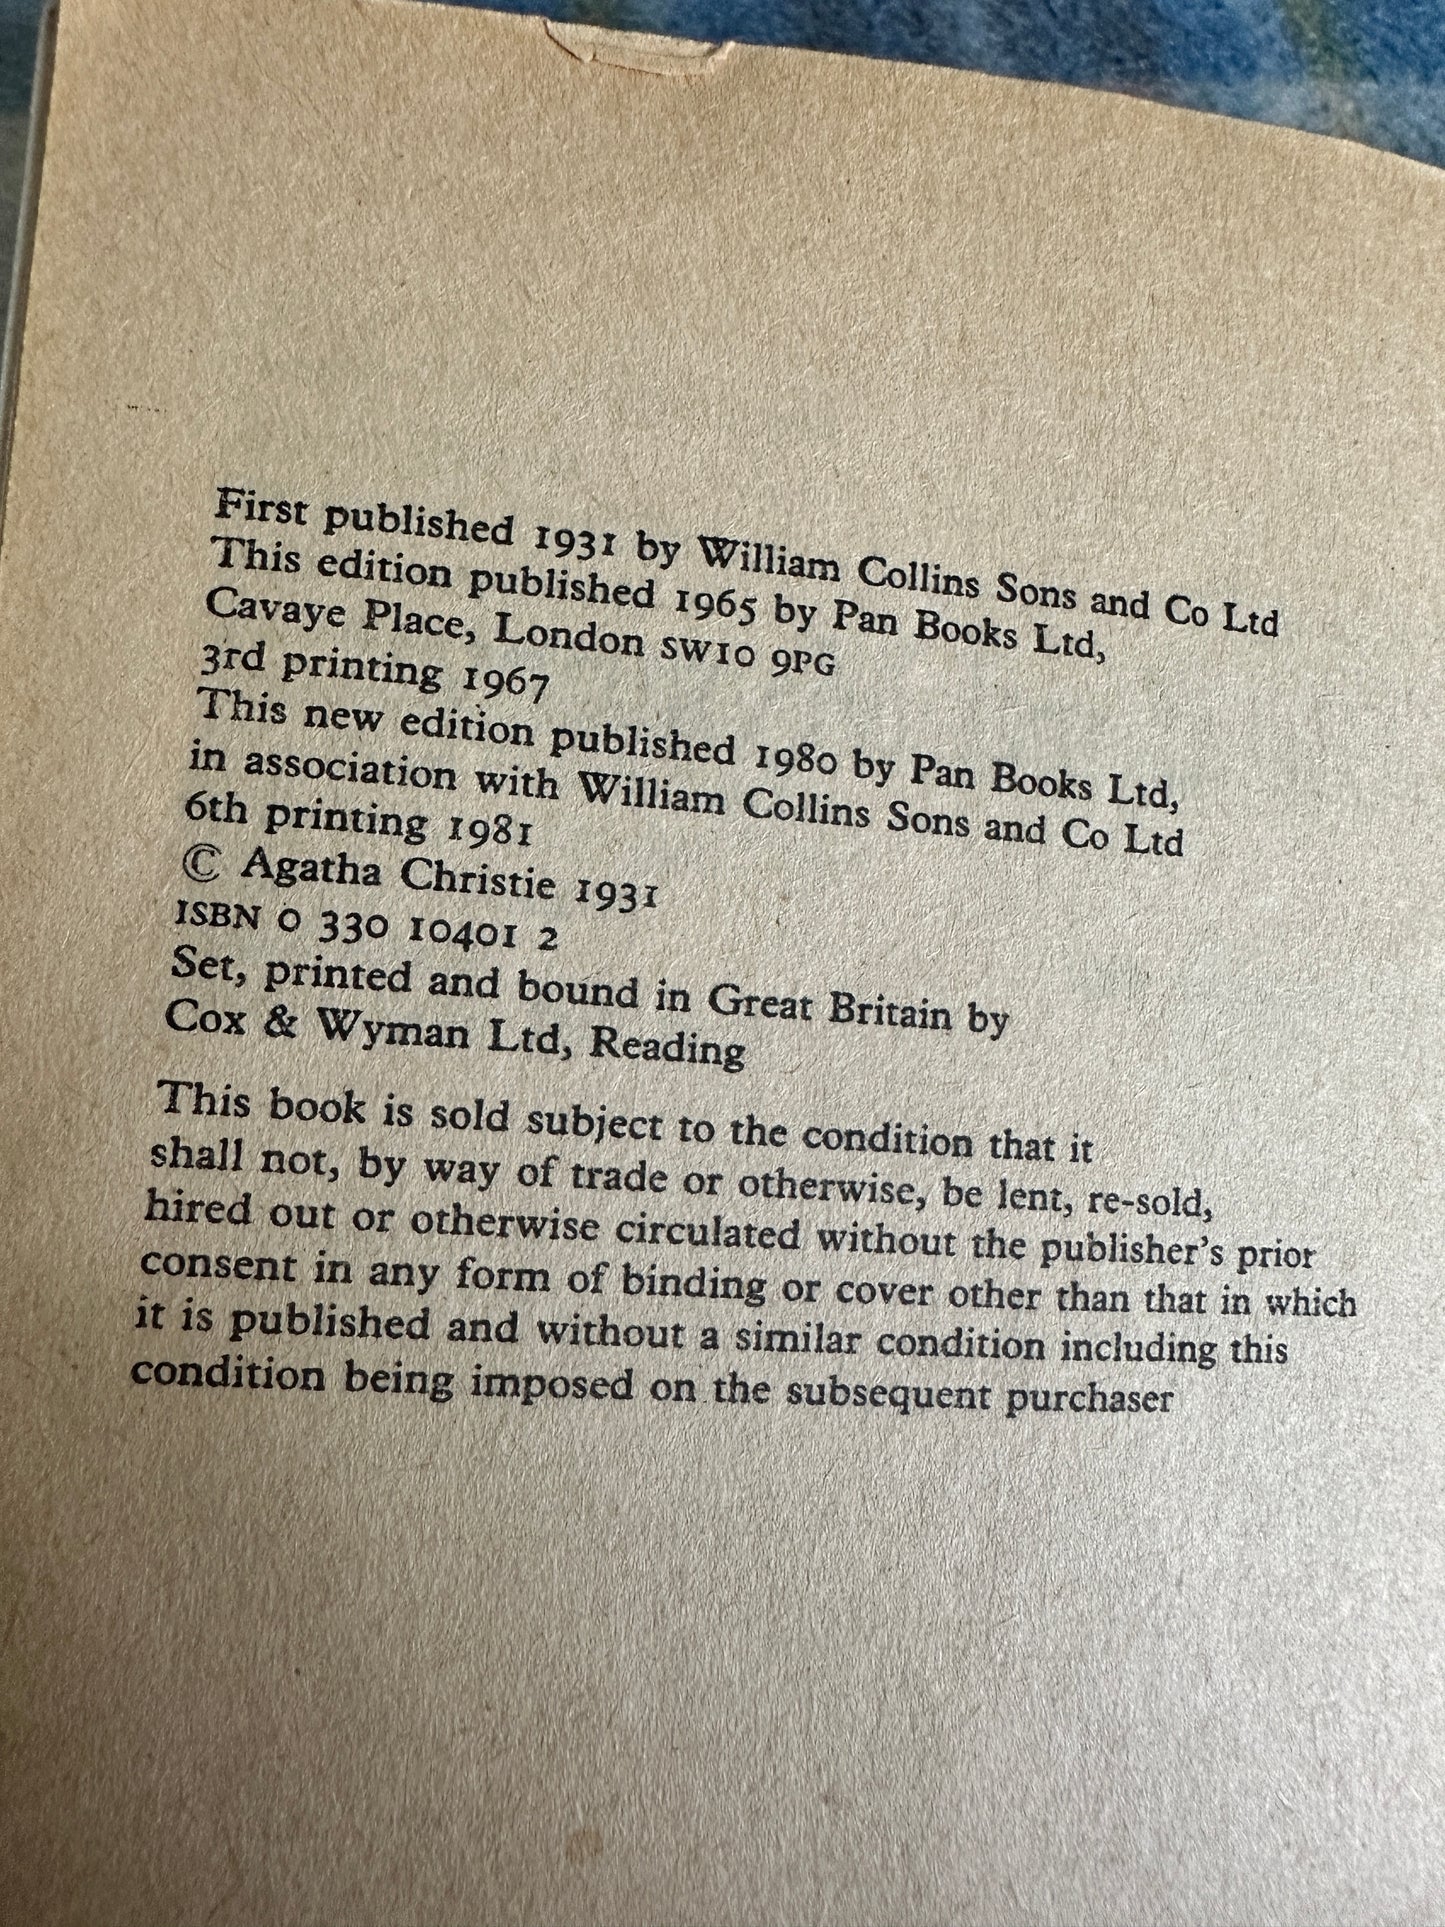 1981 The Sittaford Mystery - Agatha Christie(Pan Books)